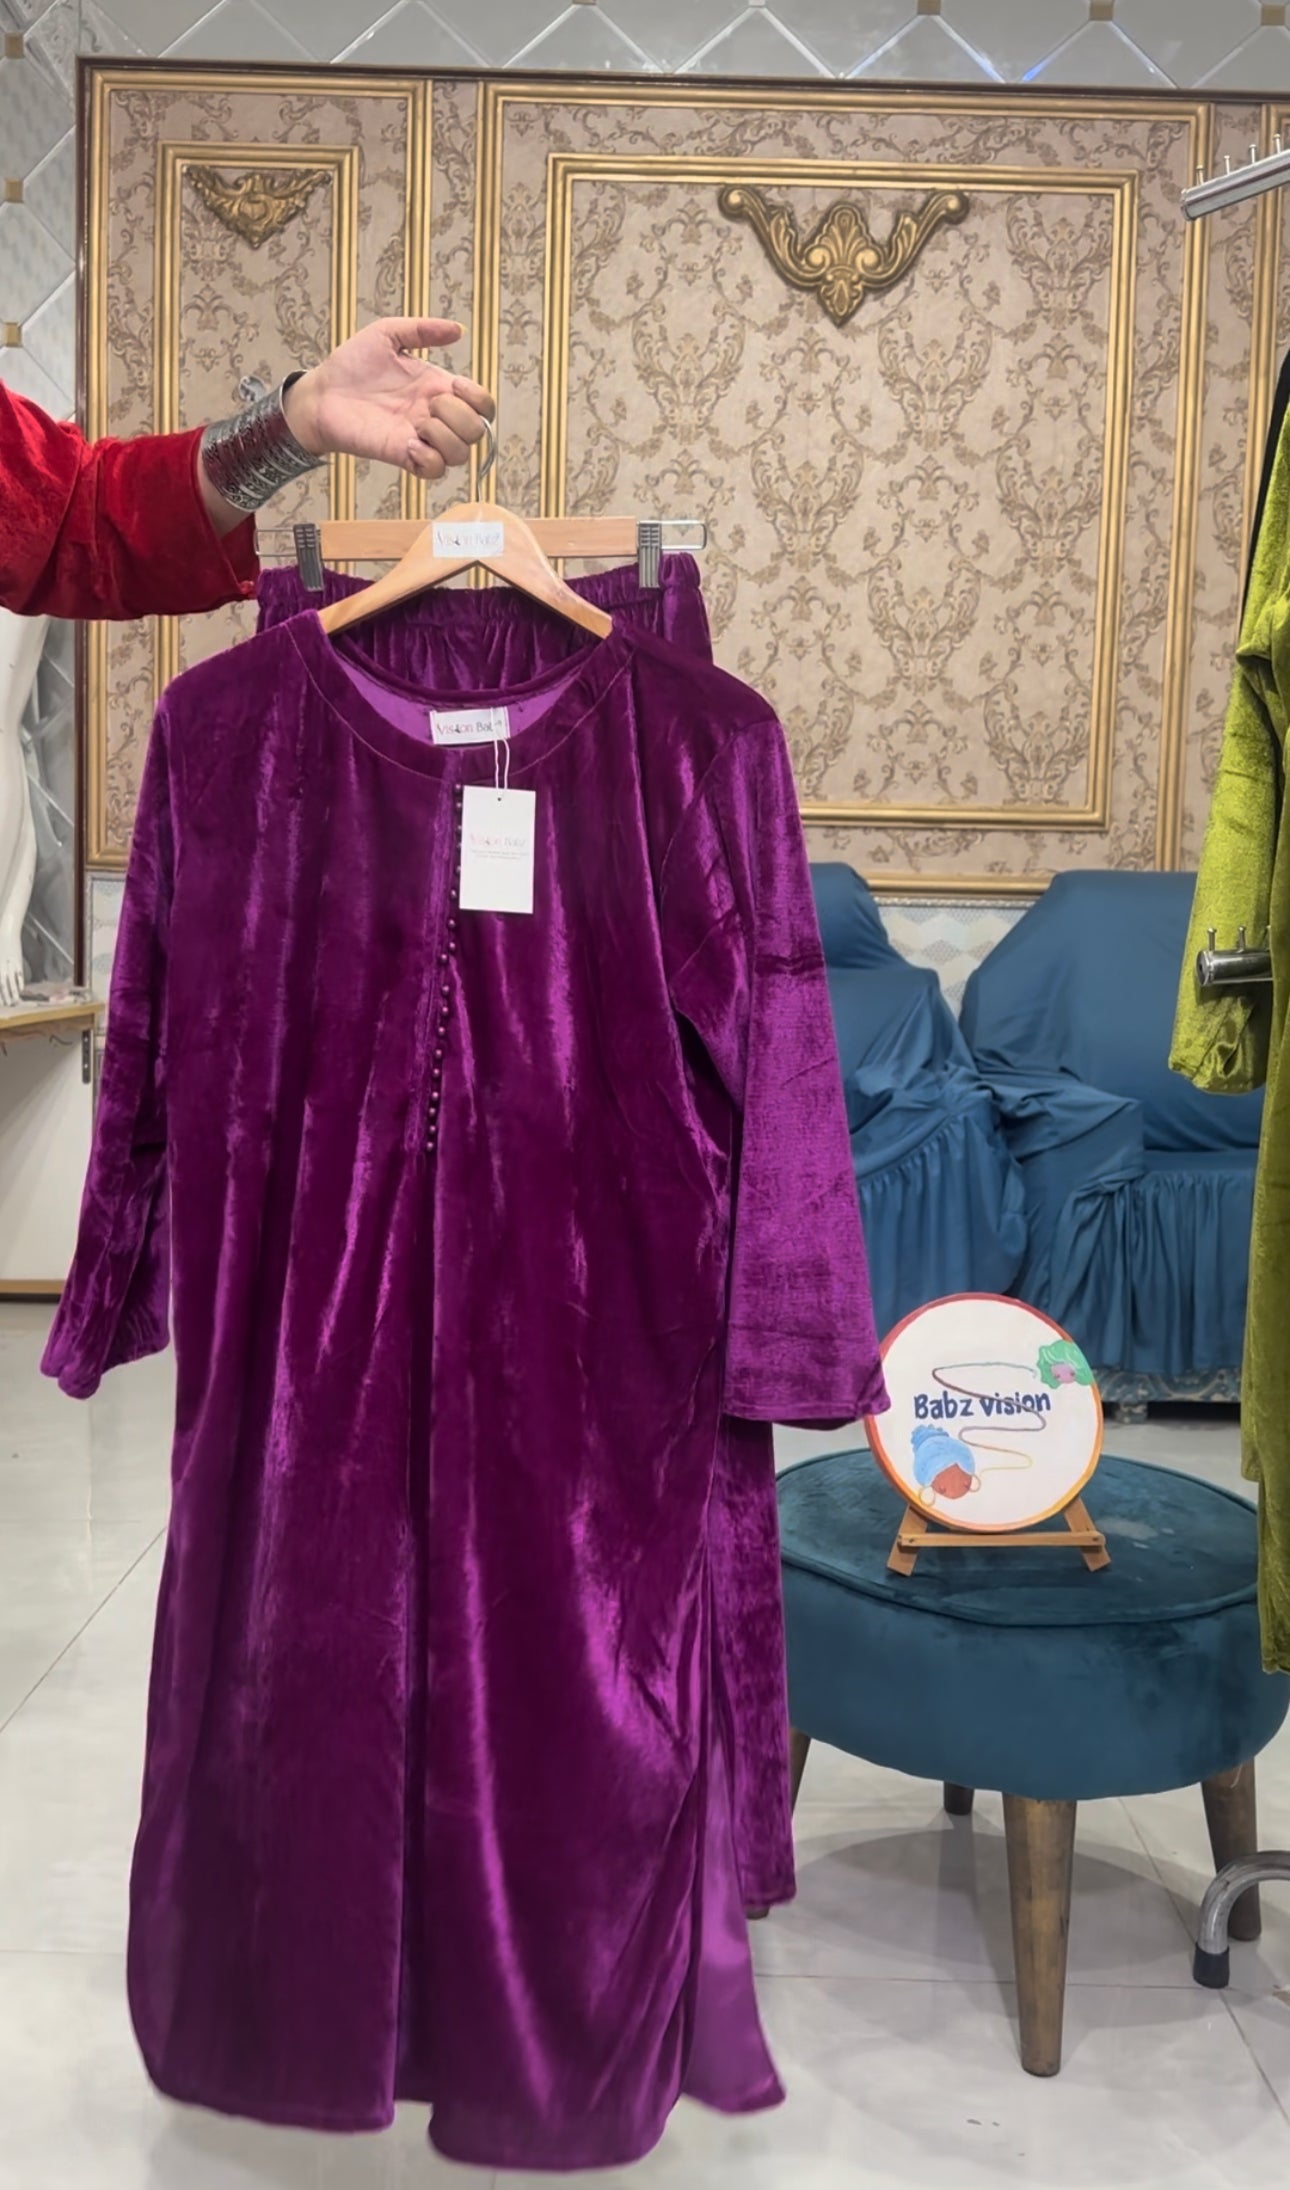 Velvet Dresses for sale in Bangalore, India | Facebook Marketplace |  Facebook